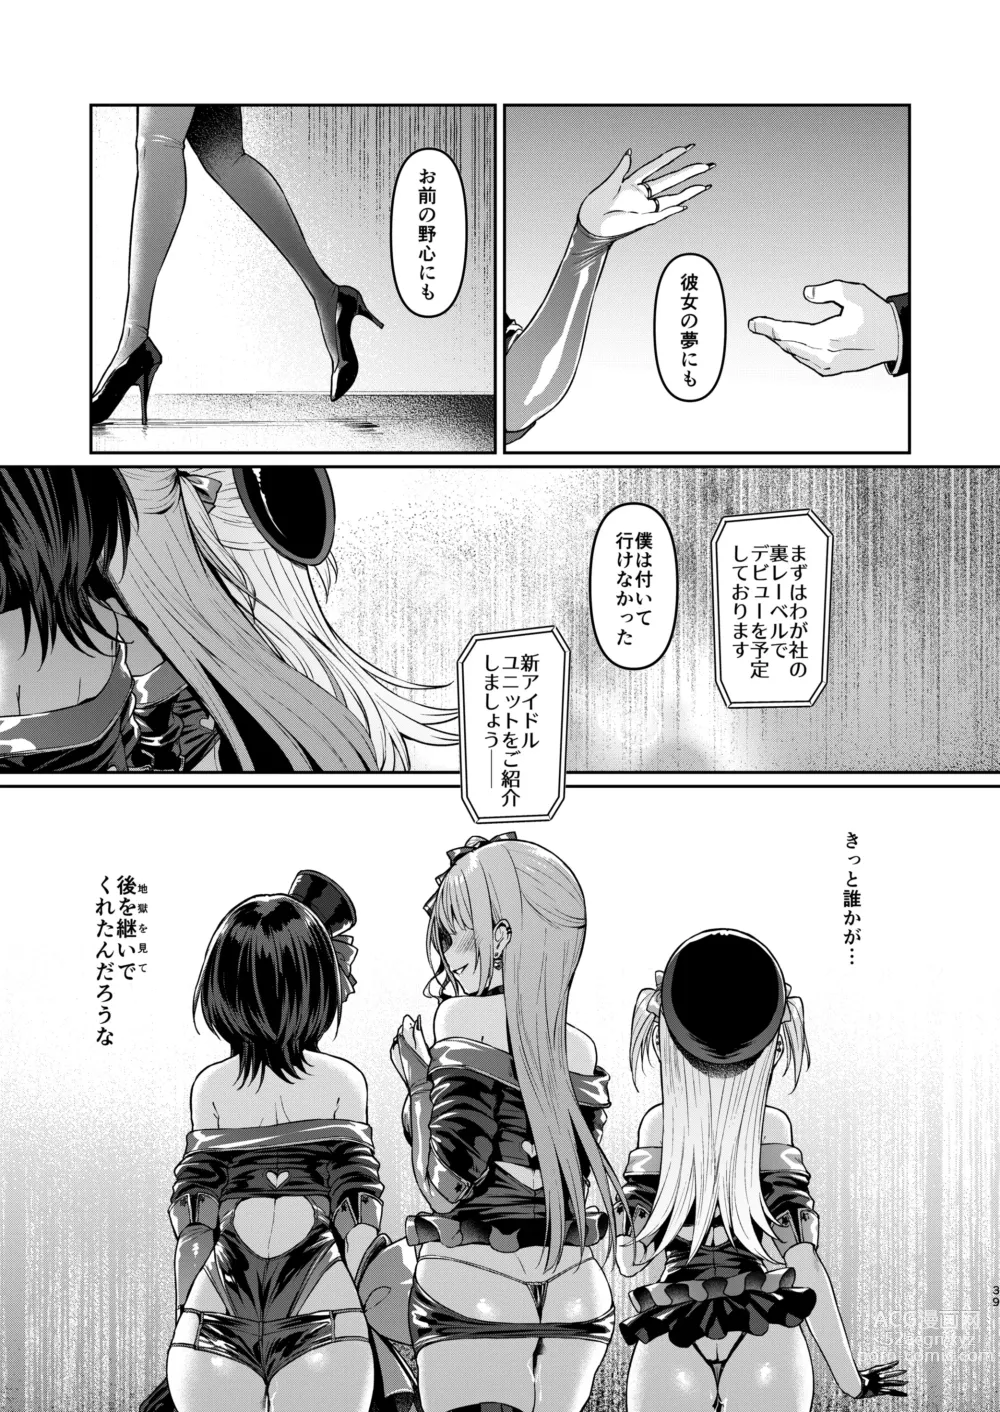 Page 38 of doujinshi Kegareboshi Kuro